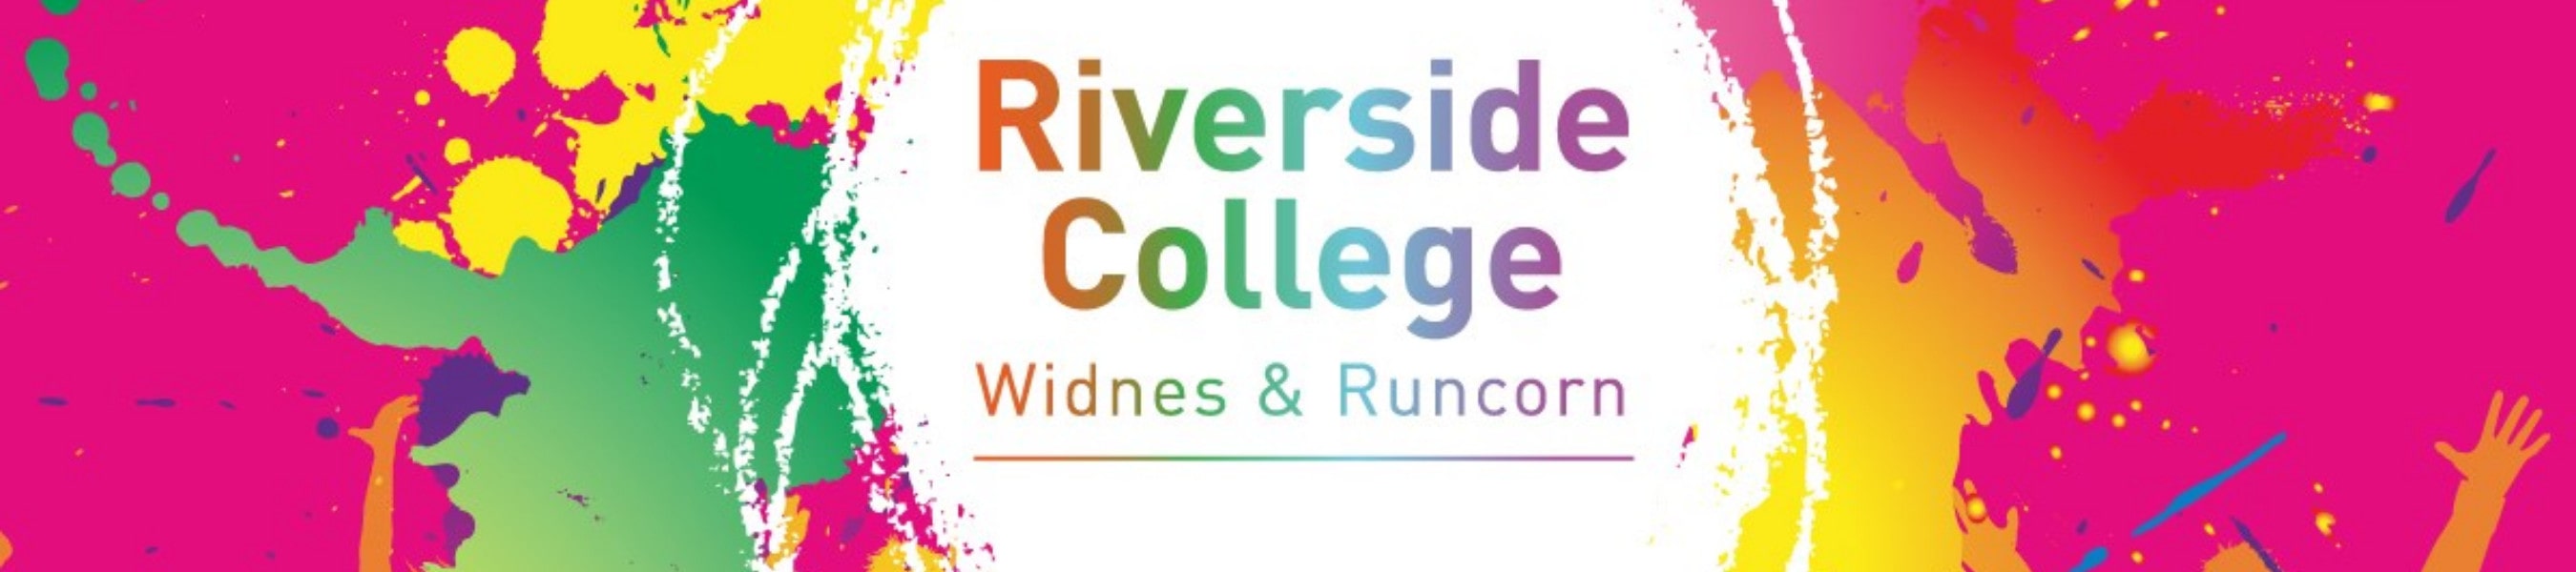 Jobs at riverside community college